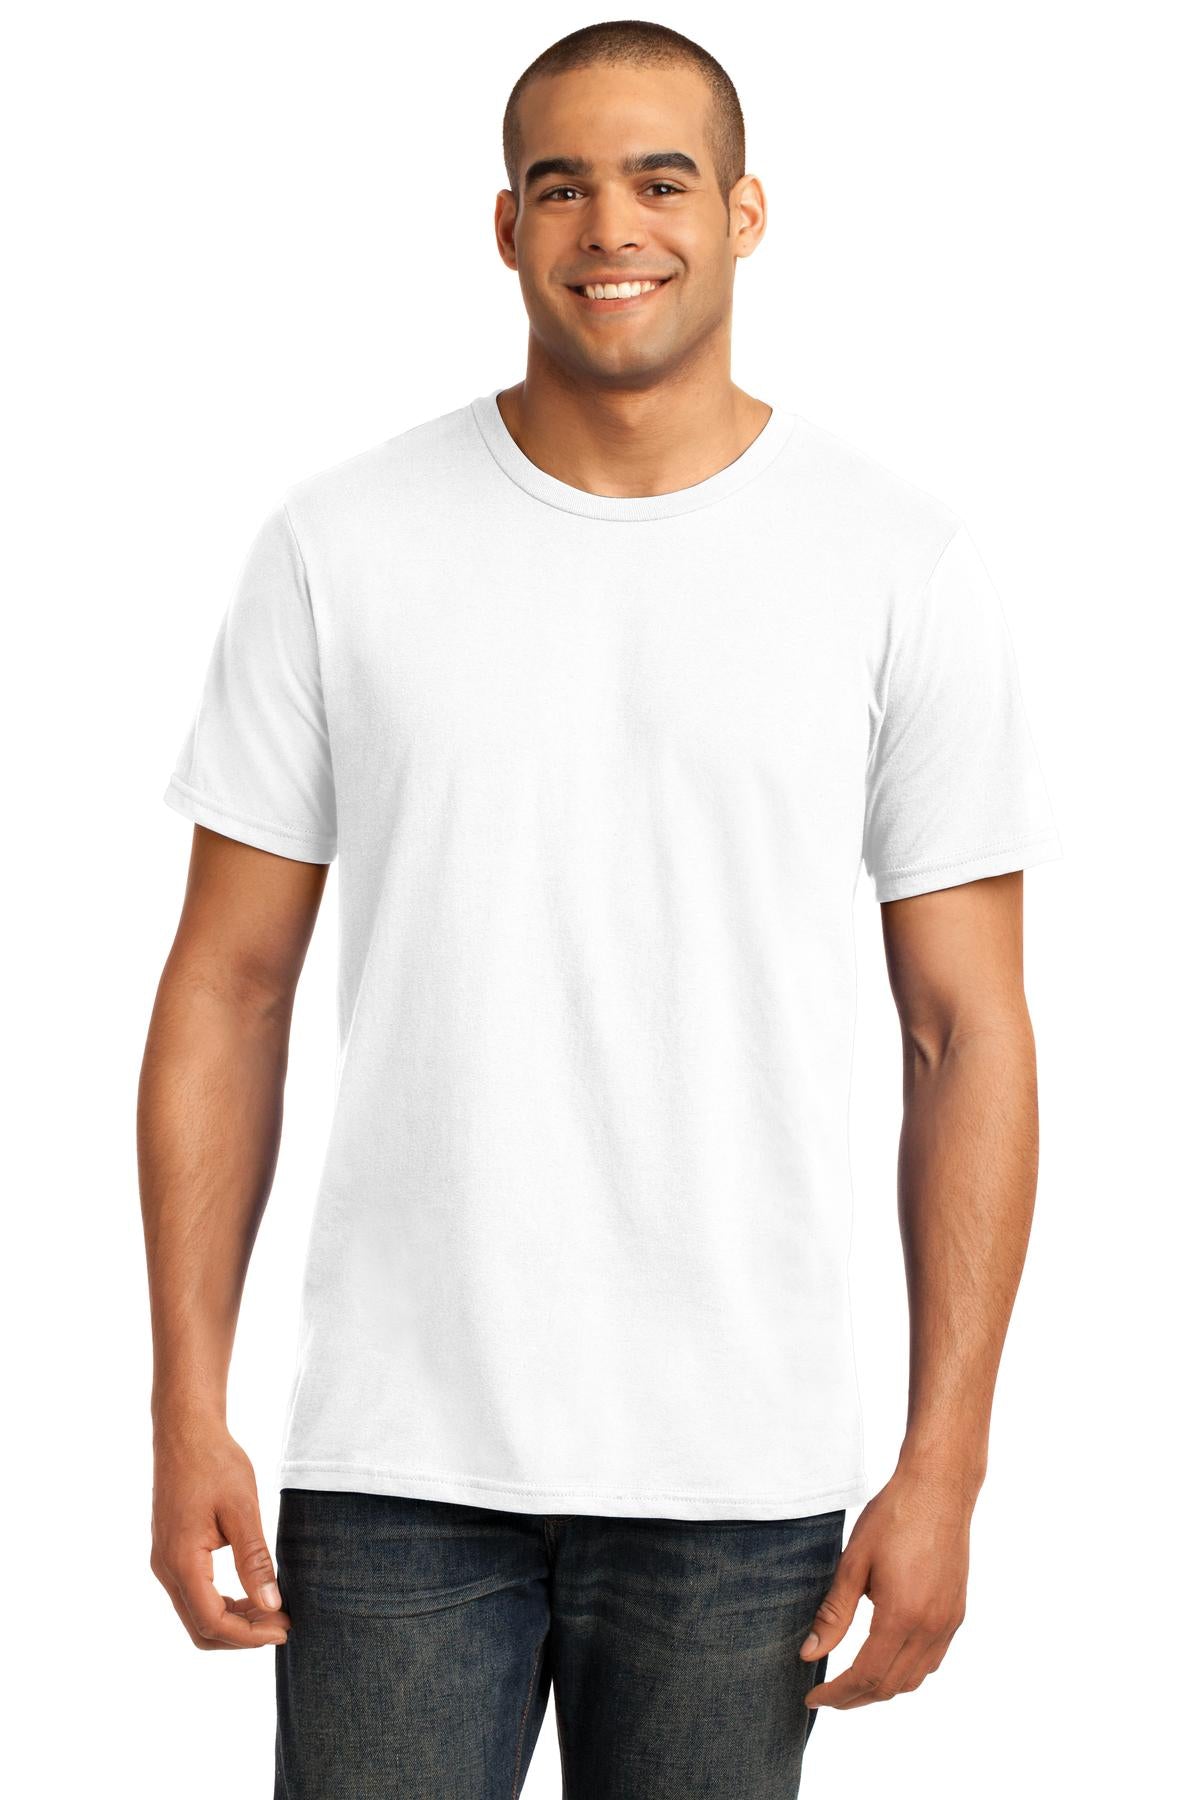 Anvil® 100% Combed Ring Spun Cotton T-Shirt. 980